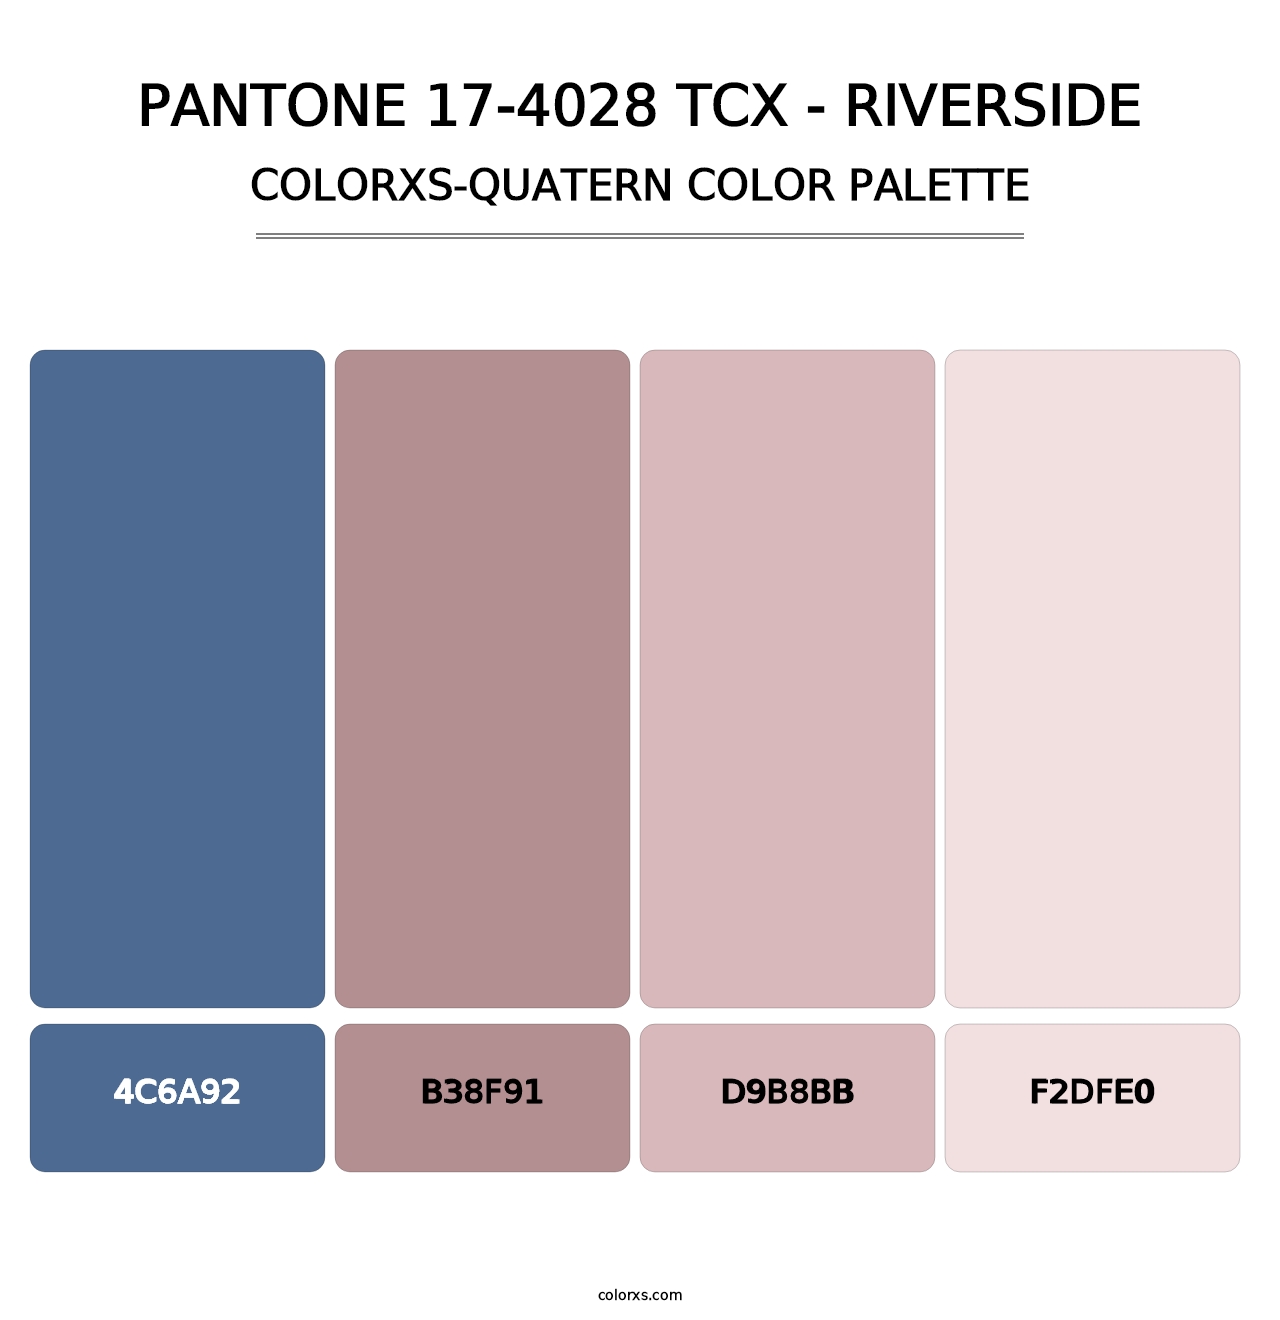 PANTONE 17-4028 TCX - Riverside - Colorxs Quatern Palette